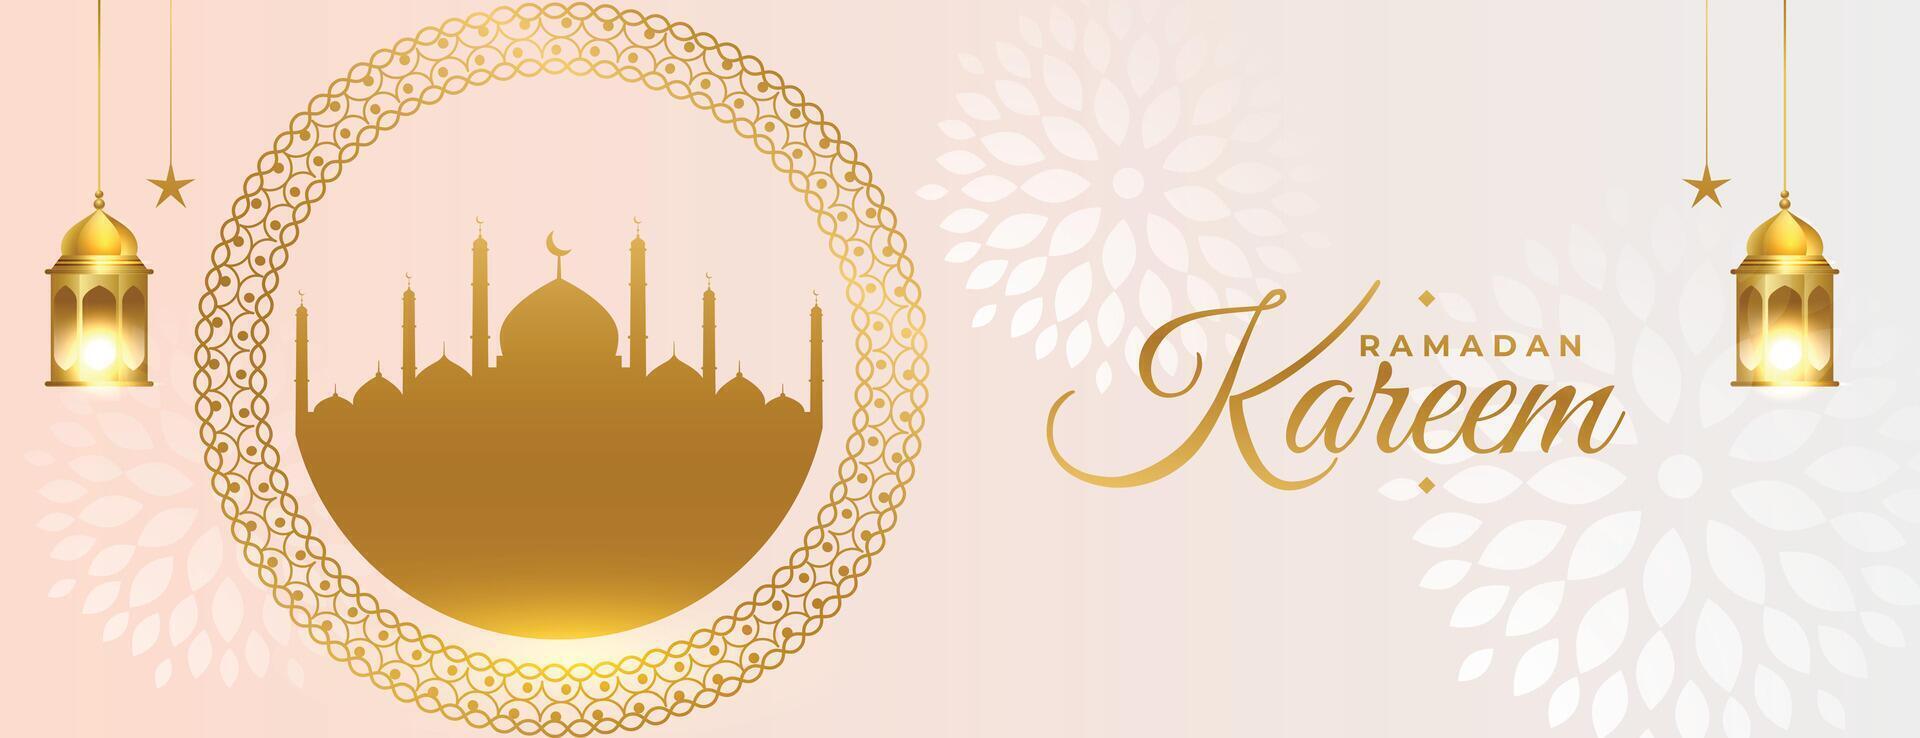 beautiful ramadan kareem blessing banner with arabic decoration vector